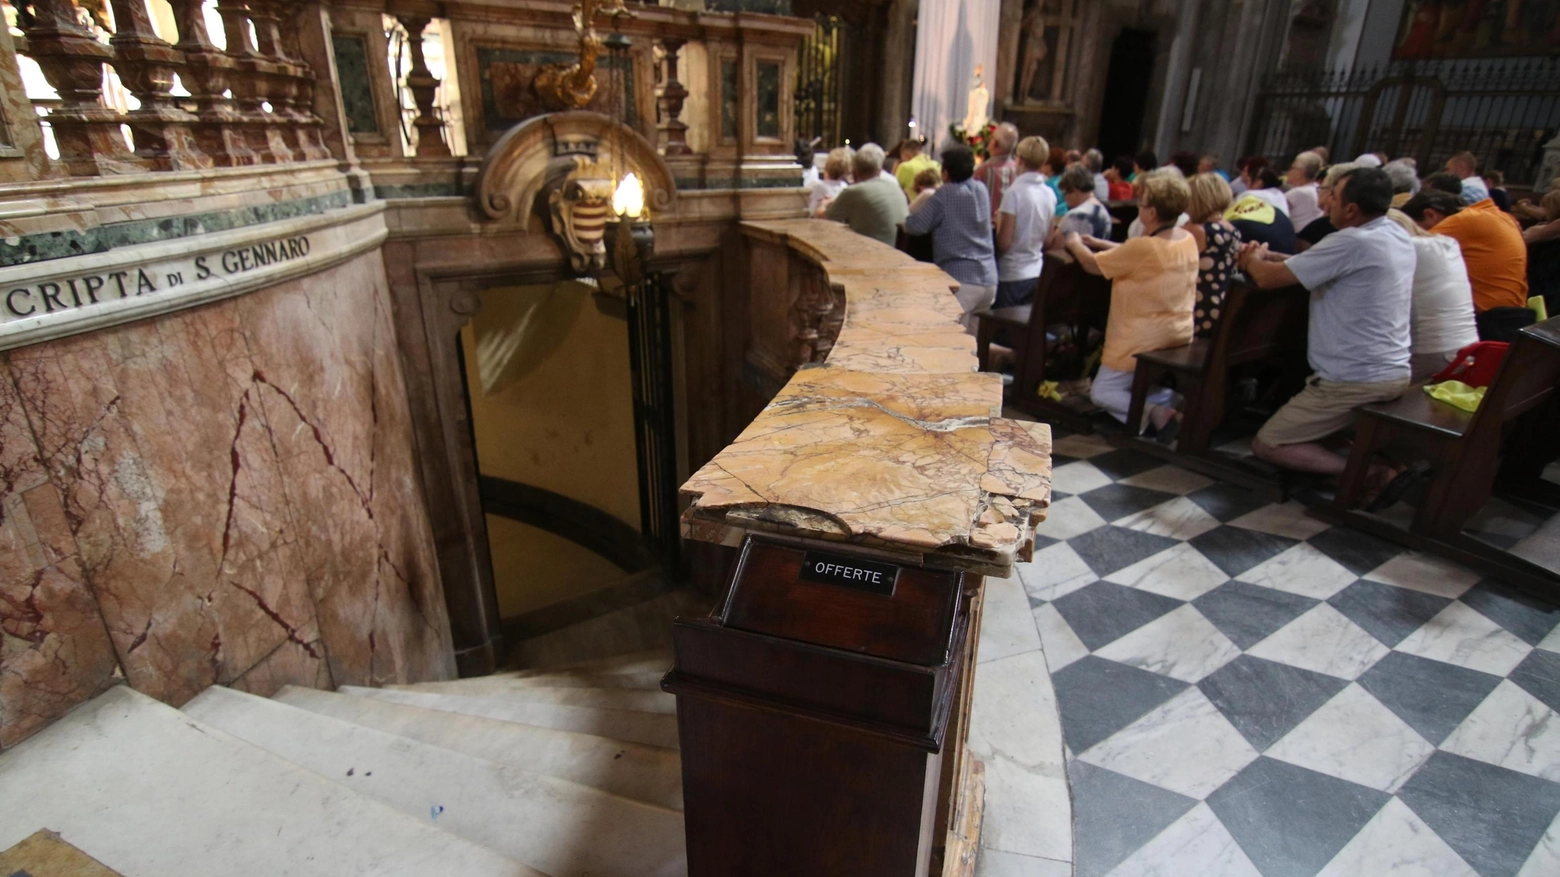 Napoli, la Cripta di San Gennaro 